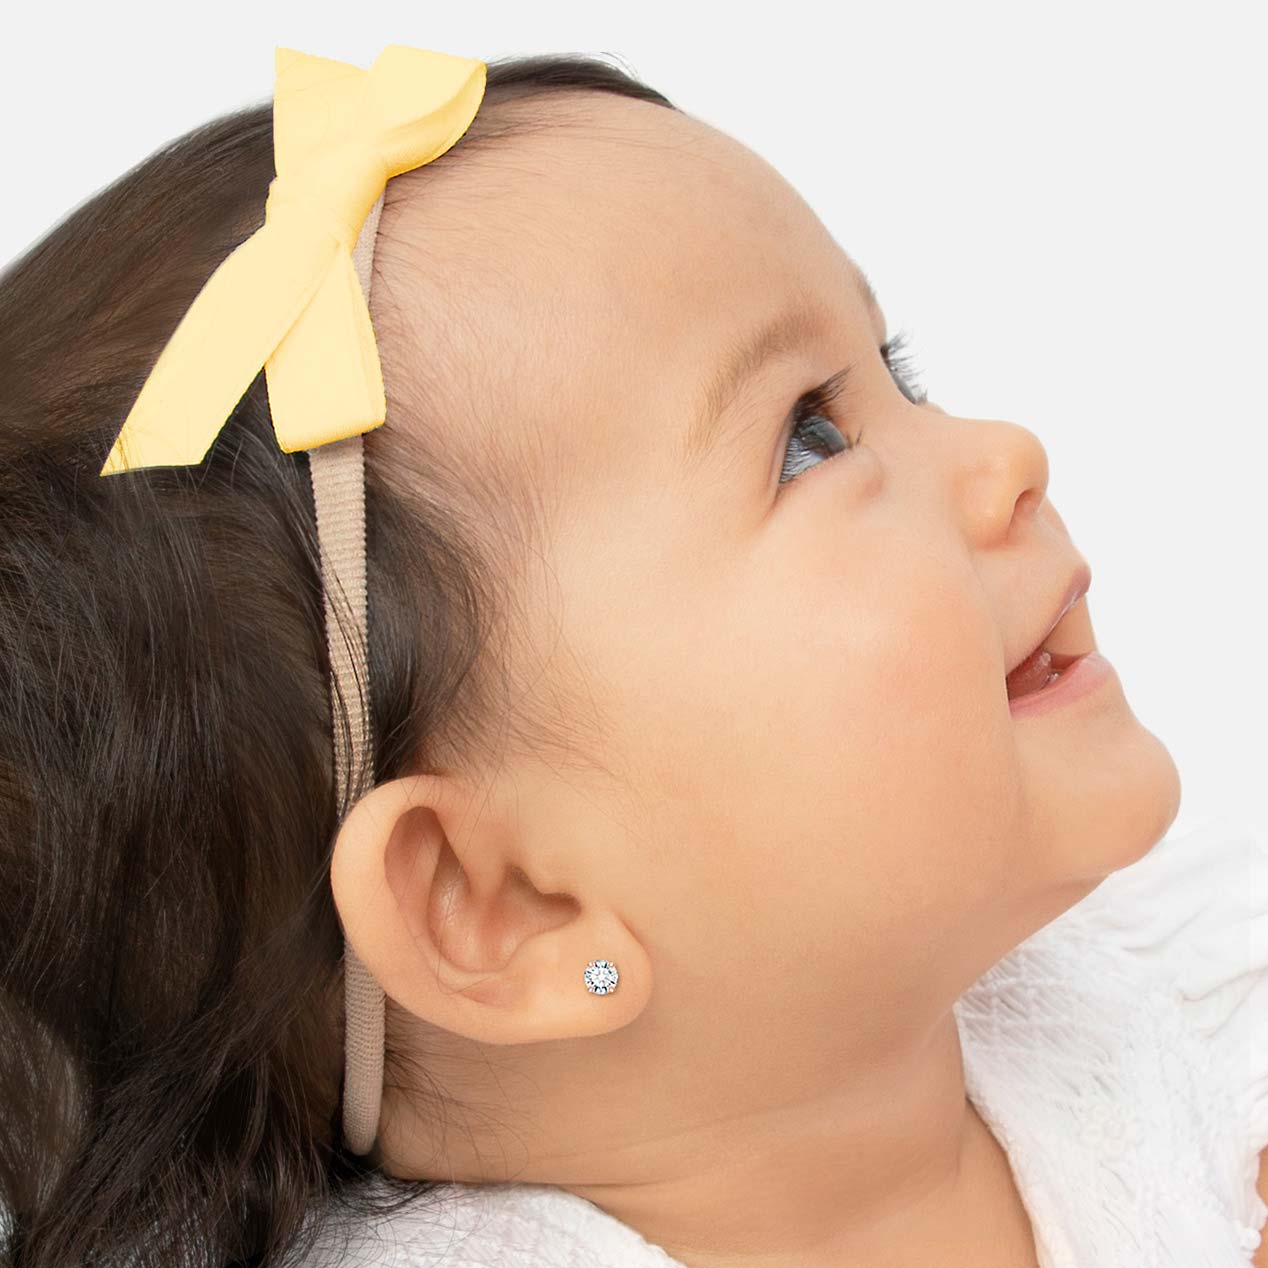 10 Best Baby girl earrings ideas  baby girl earrings, girls earrings,  earrings